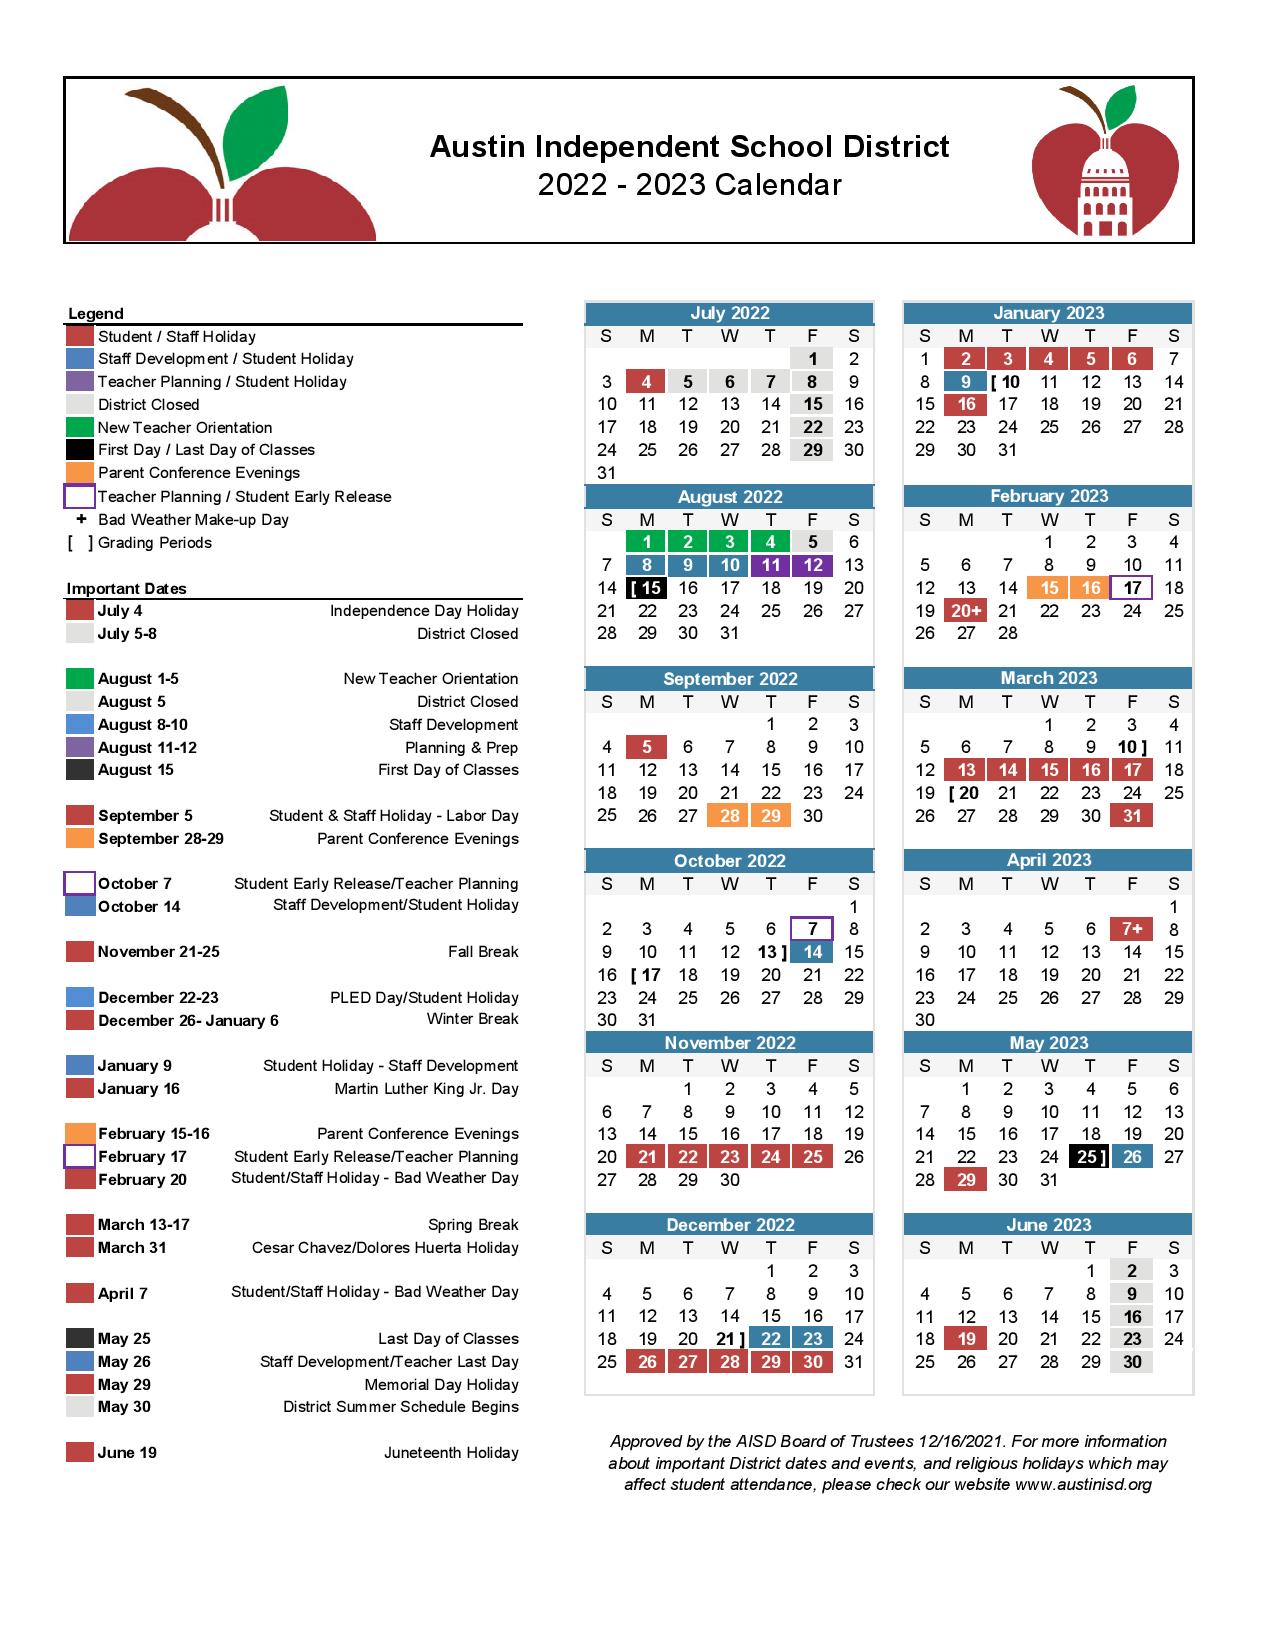 austin-independent-school-district-calendar-holidays-2022-2023